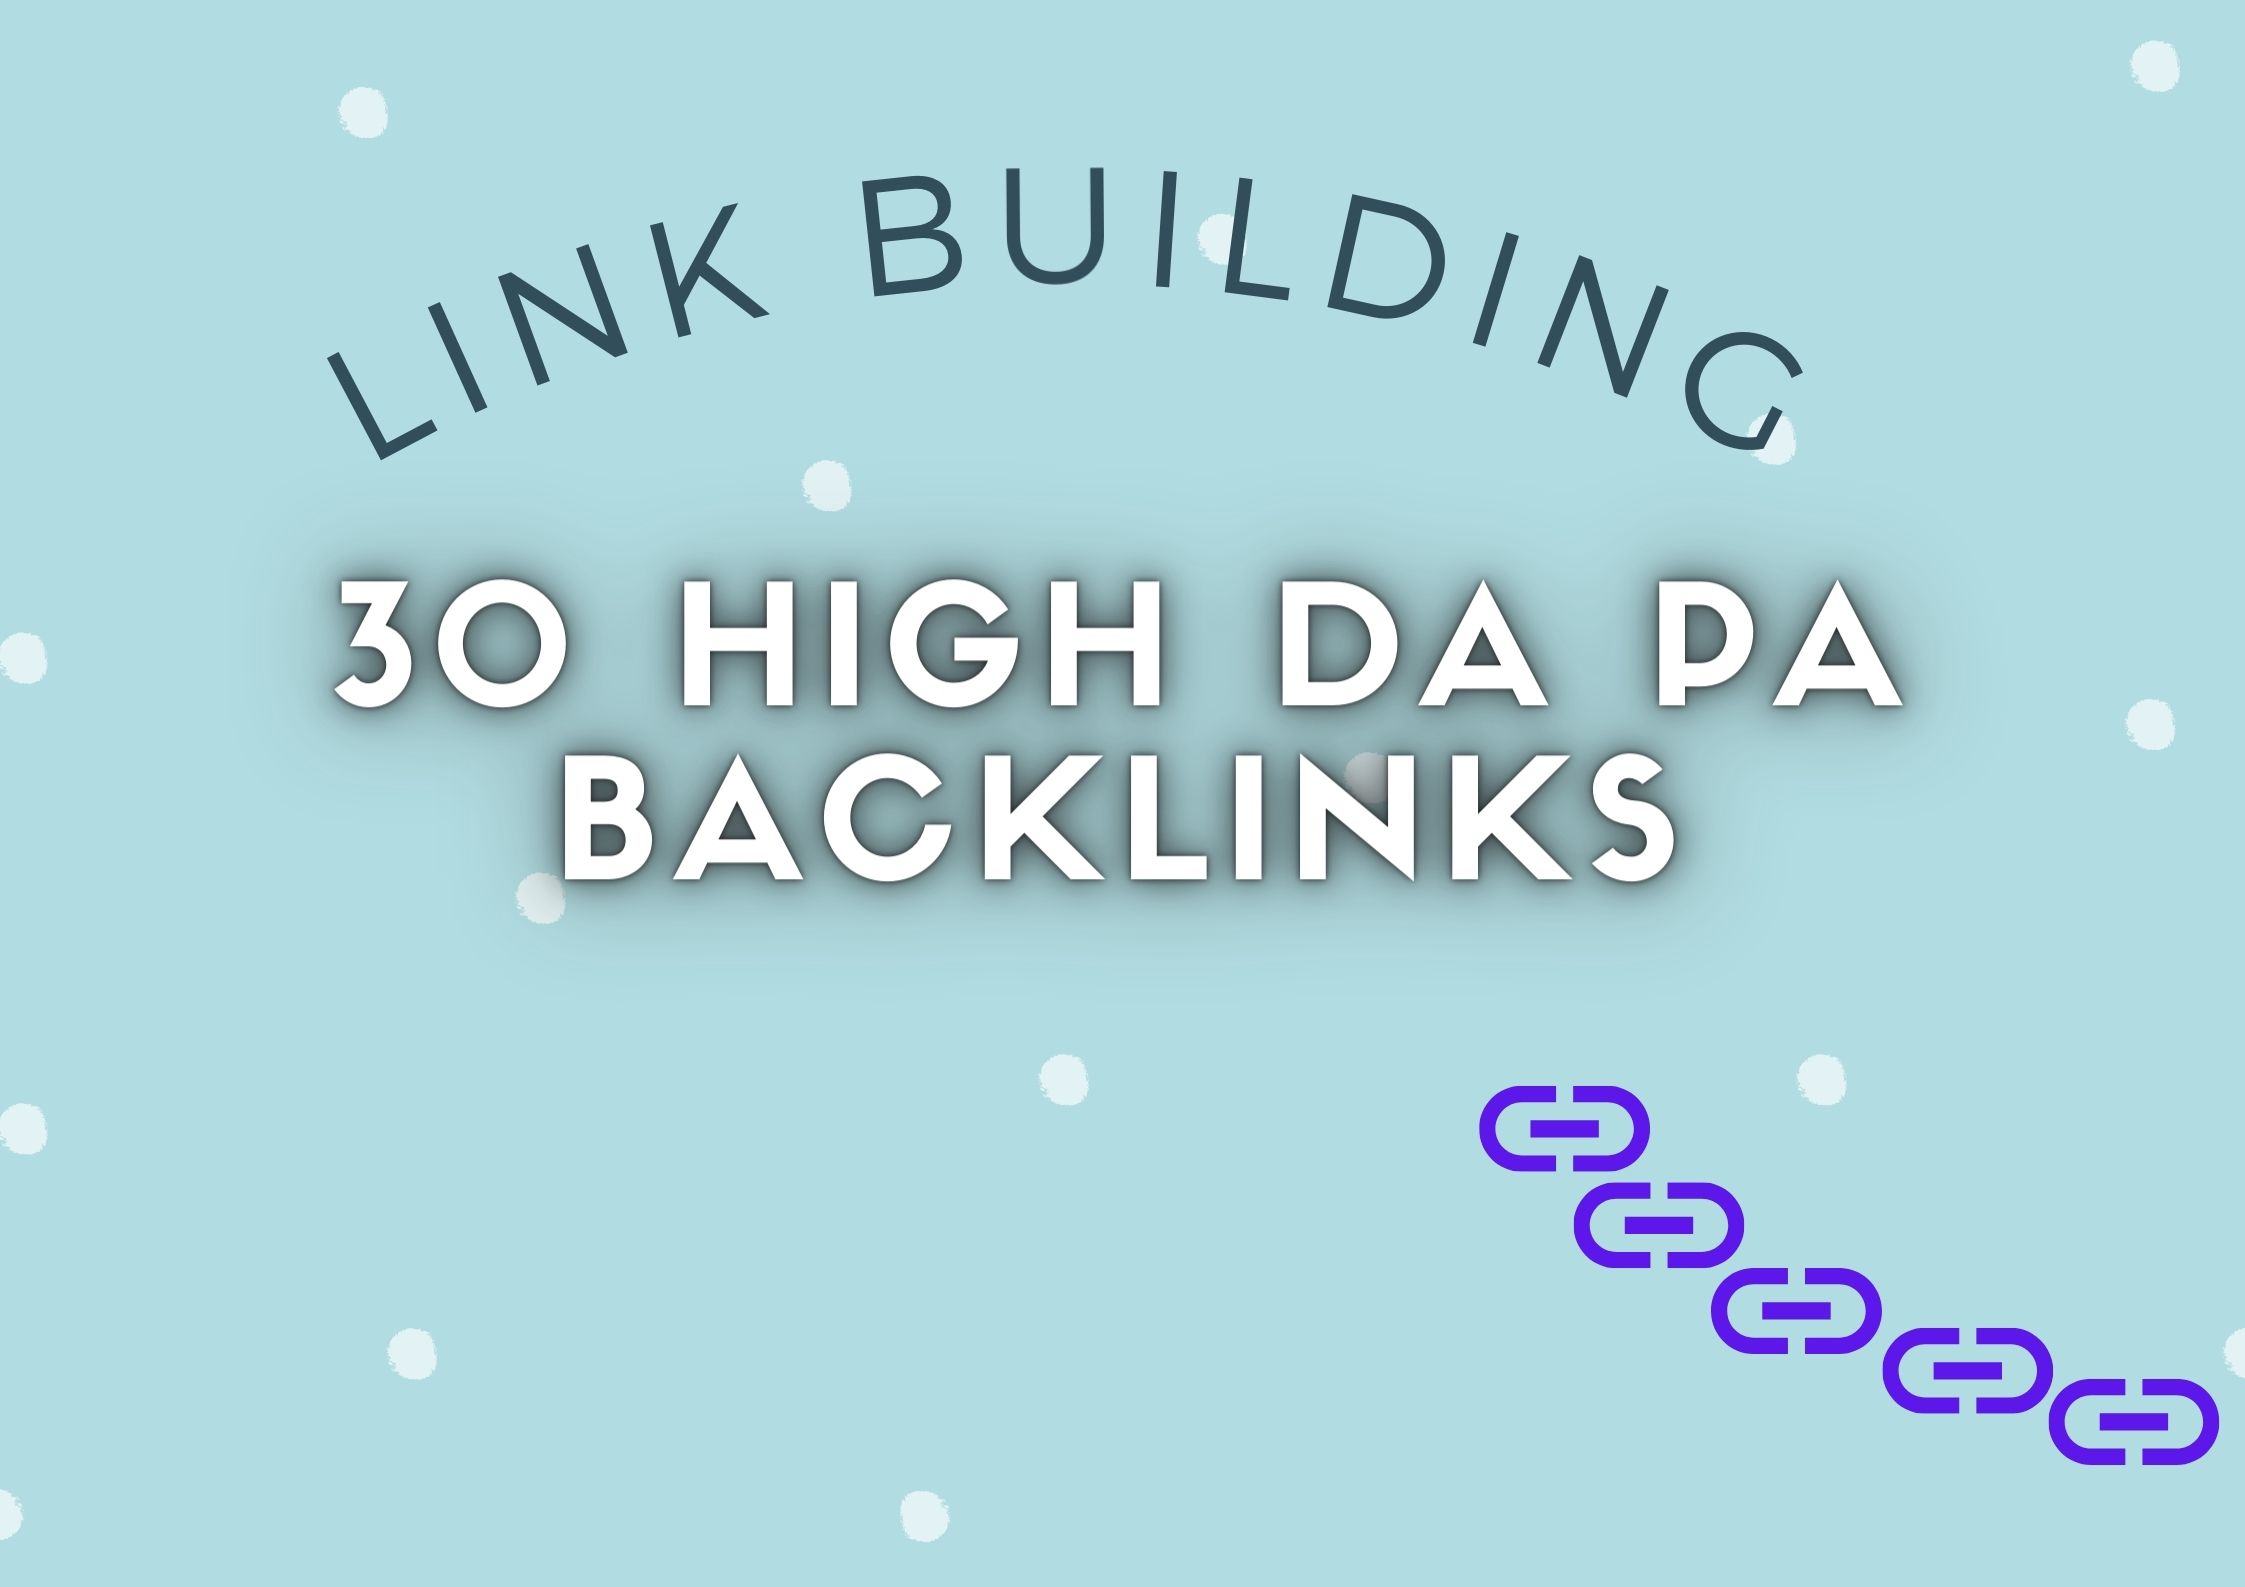 You will get high DA backlinks website